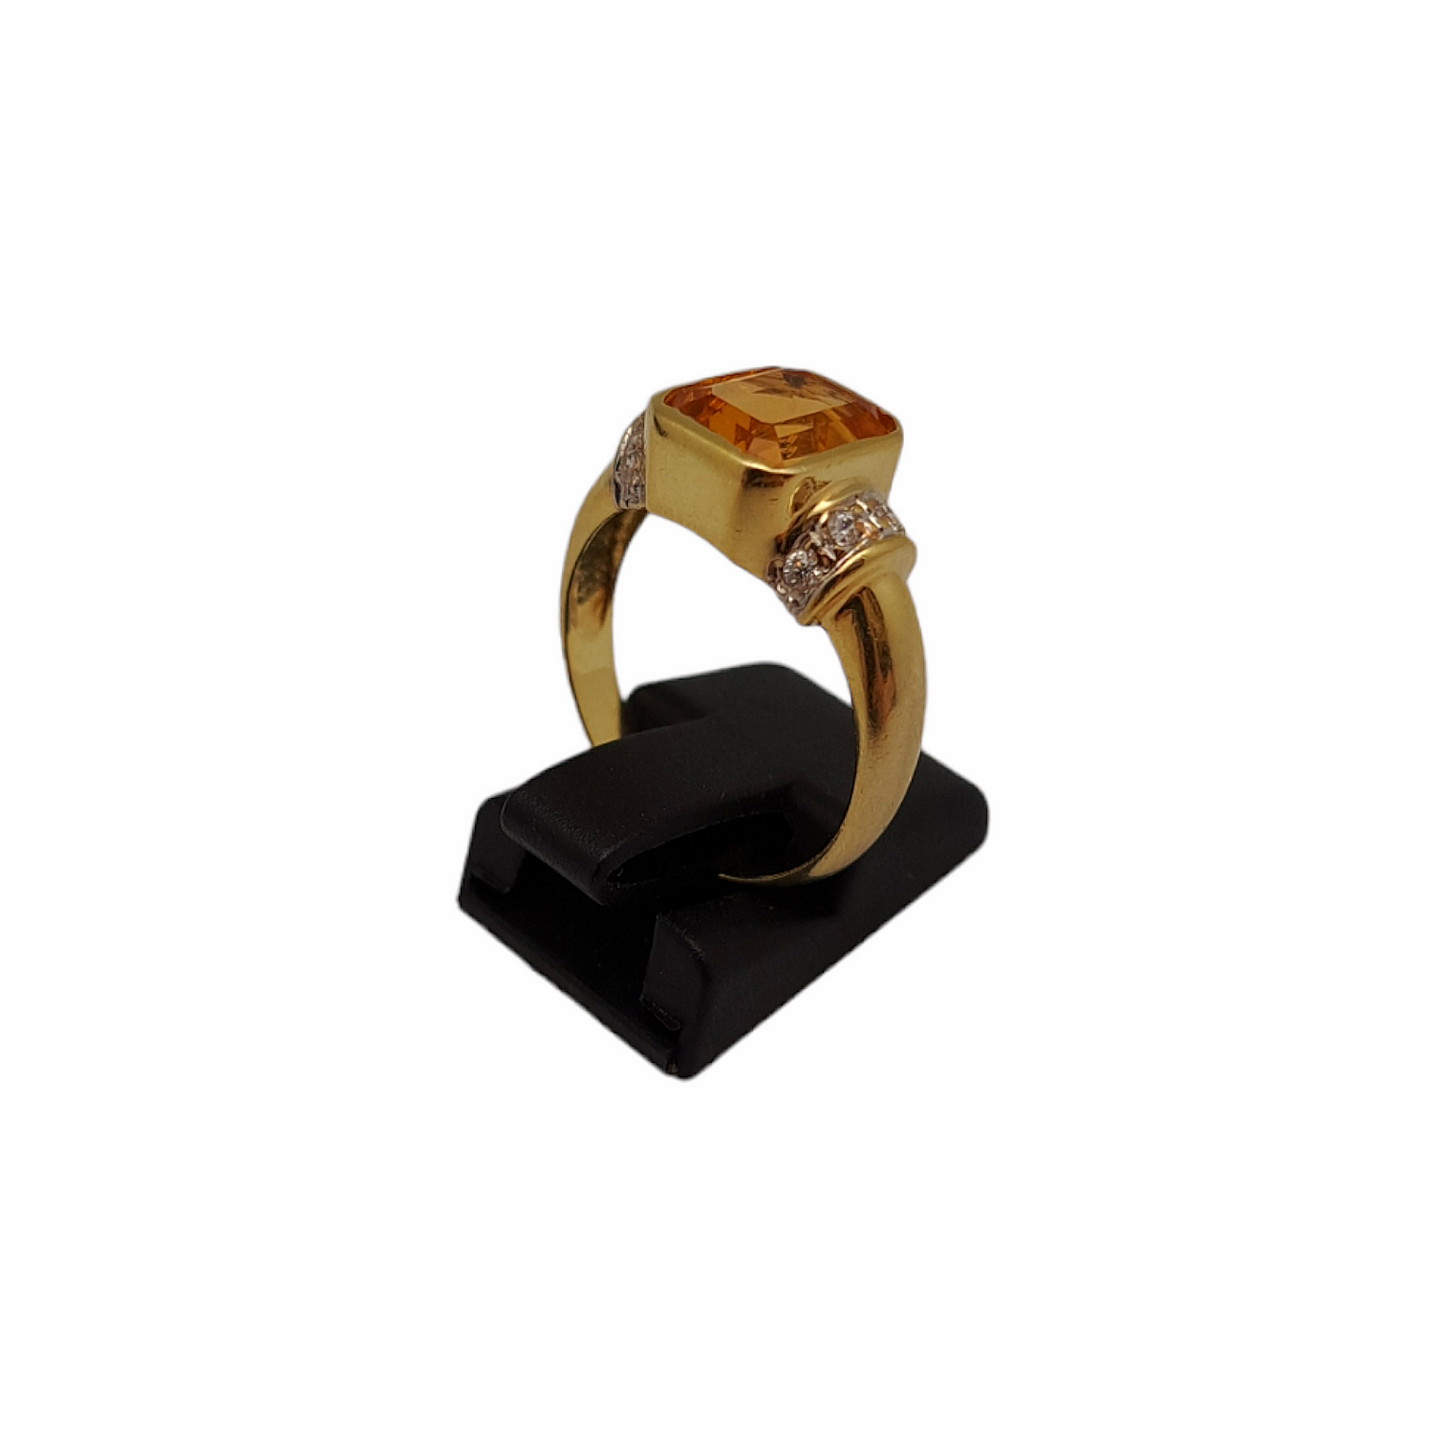 Zlati prstan "AMBER" 14K 585/1000; masa=4.06g